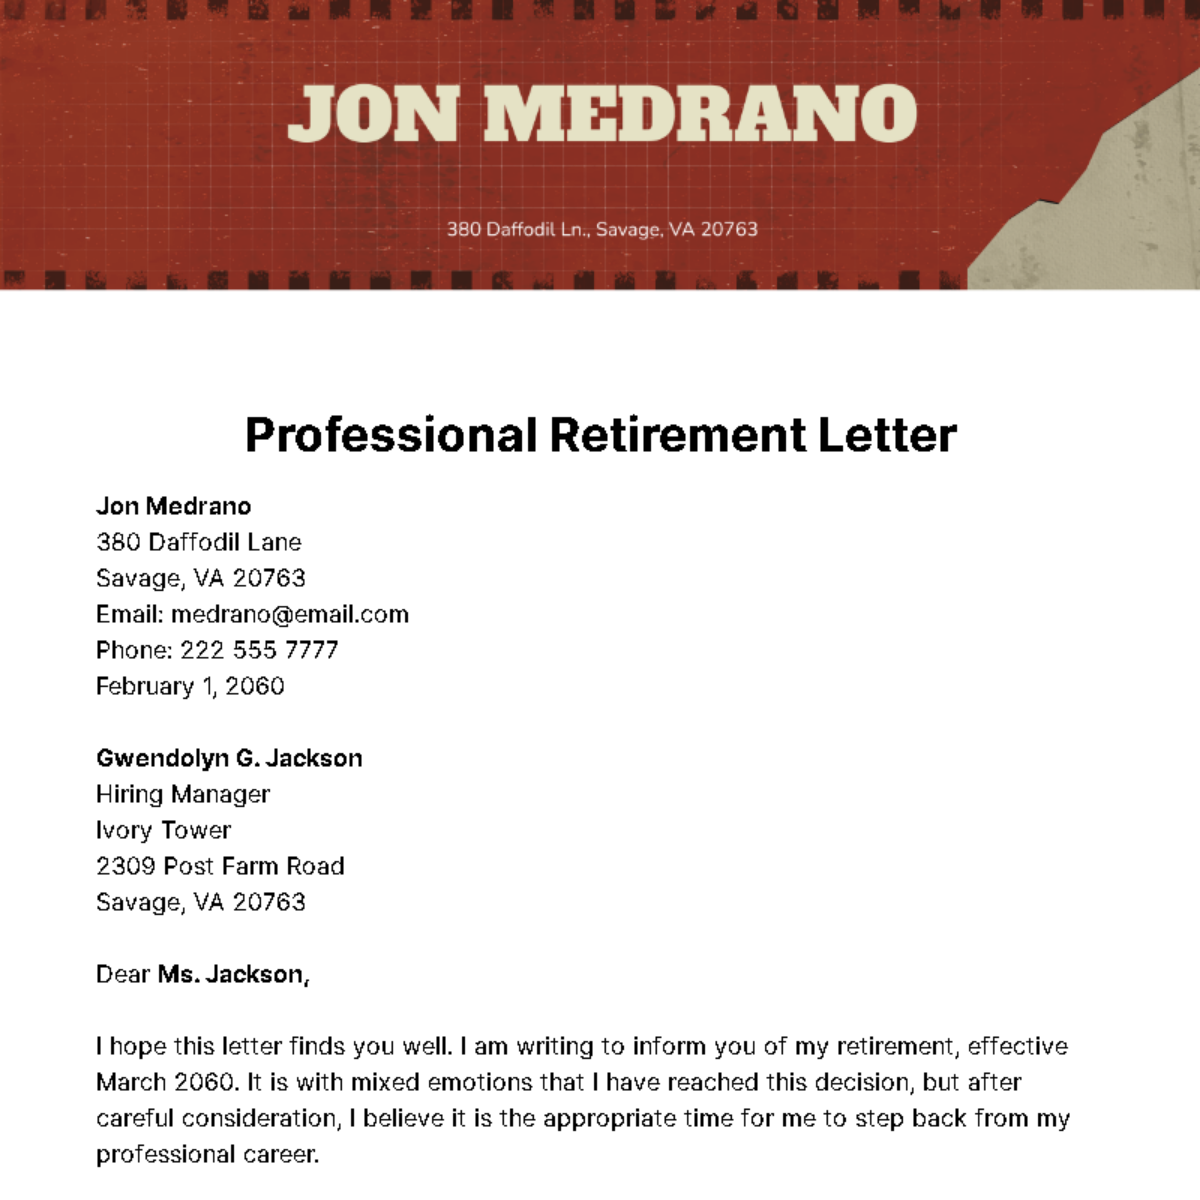 Professional Retirement Letter Template